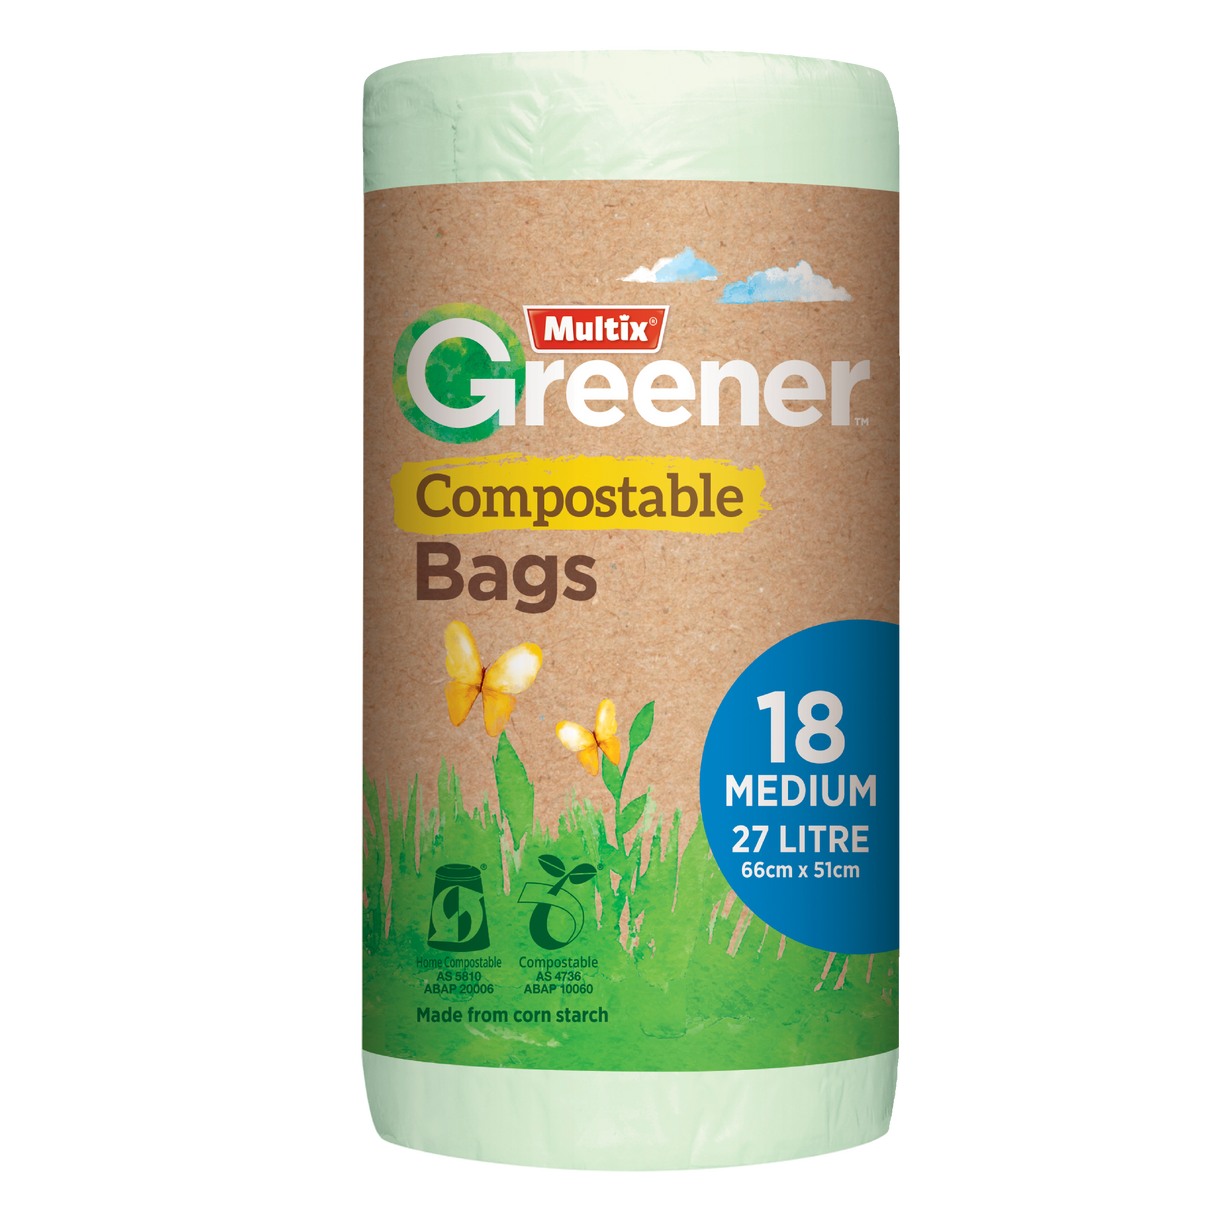 Multix Greener Compostable Bags Medium 18 Pack